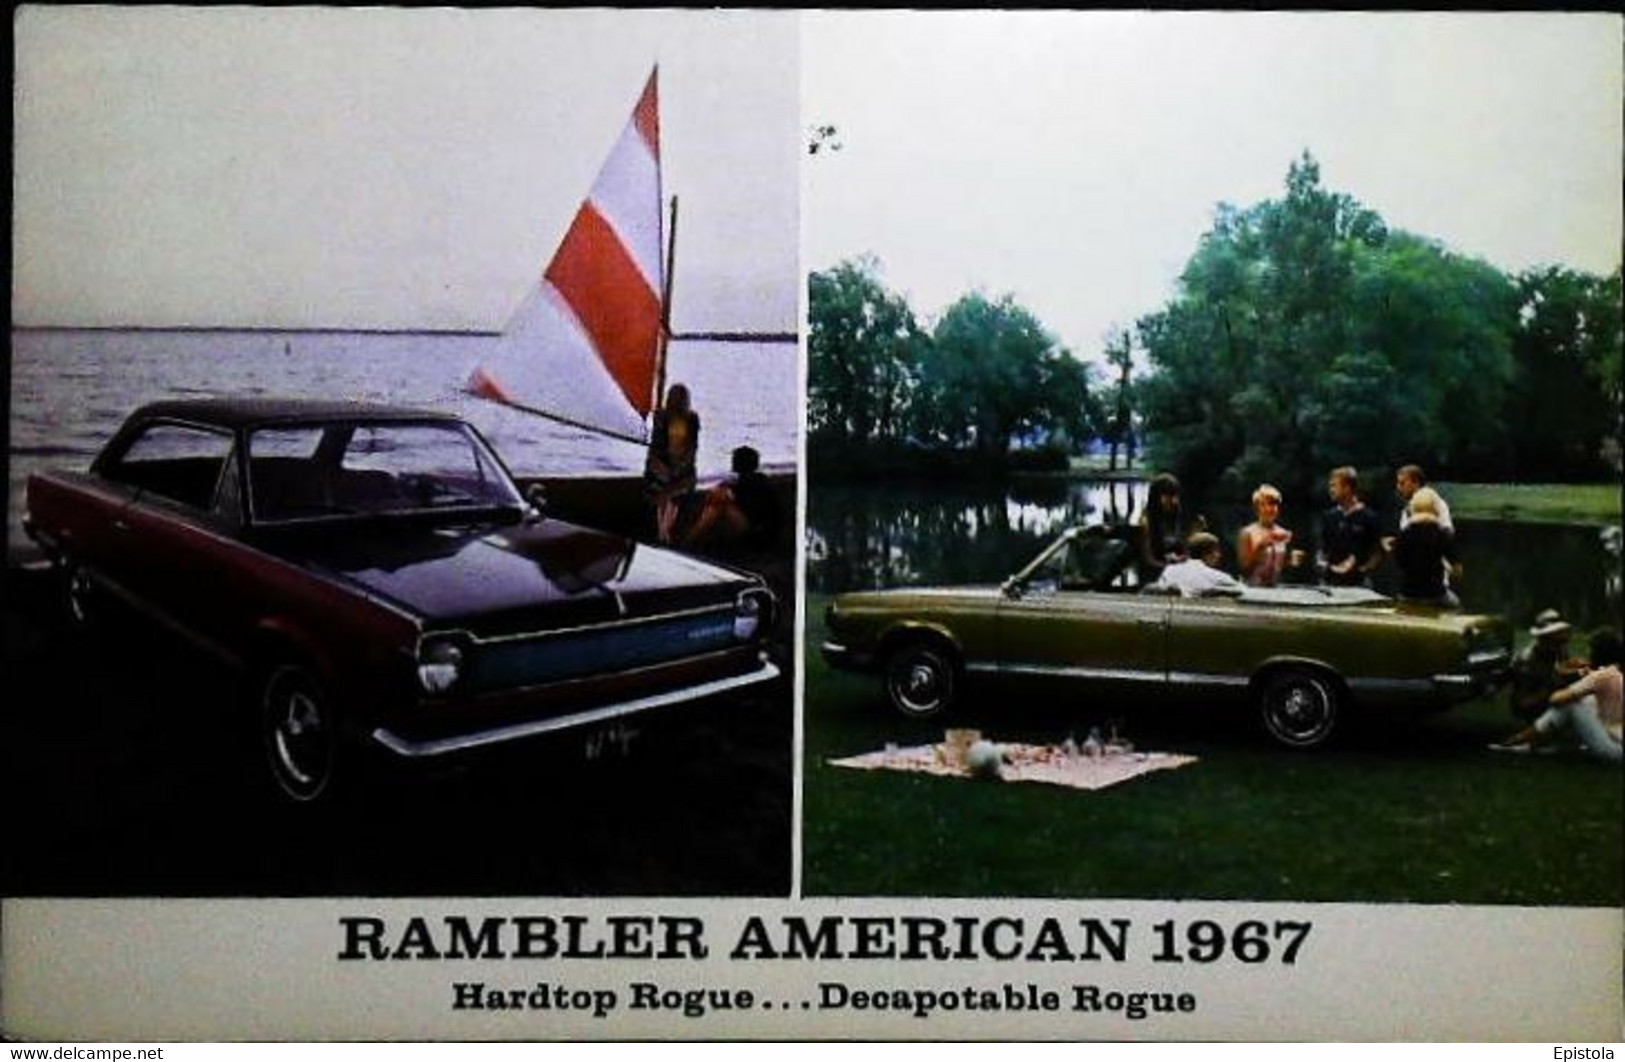 ► AM  RAMBLER American  & Sail Picnic 1967  - Automobile Publicity   (Litho In U.S.A.) Roadside - American Roadside